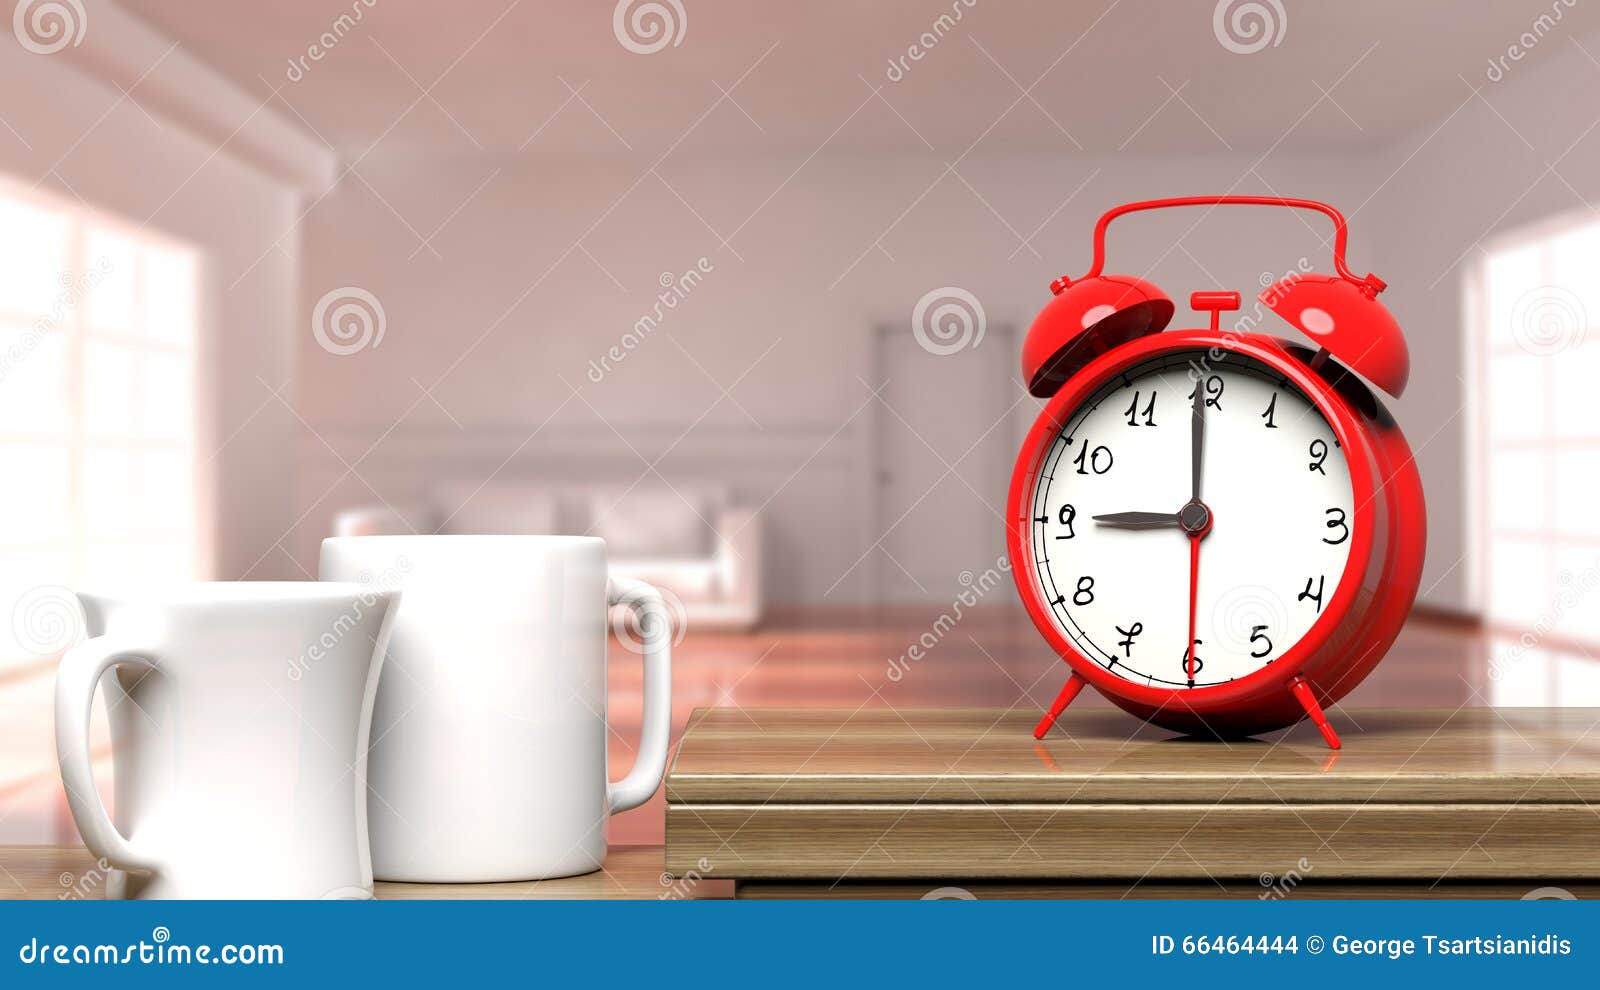 https://thumbs.dreamstime.com/z/retro-alarm-clock-closeup-two-cups-coffee-house-interior-background-66464444.jpg